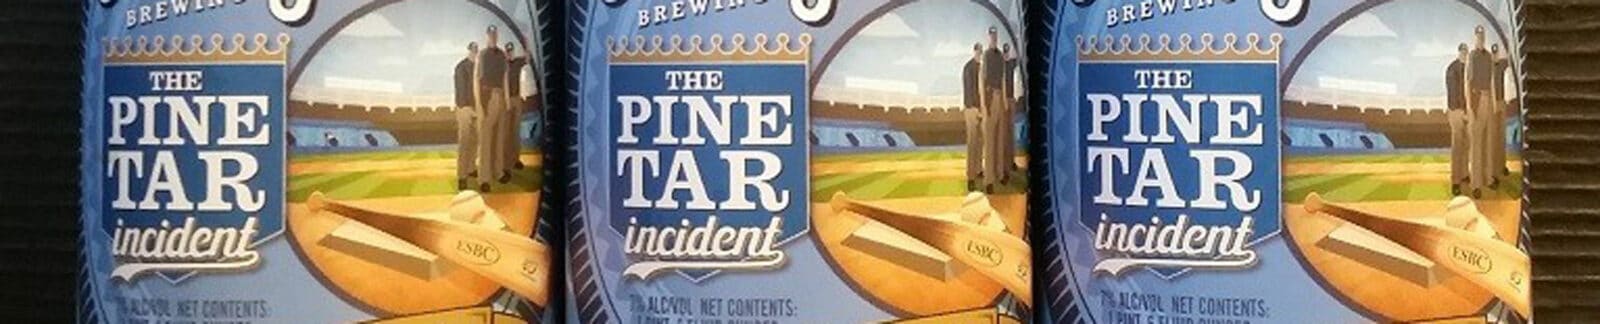 Pine Tar Incident Black IPA header